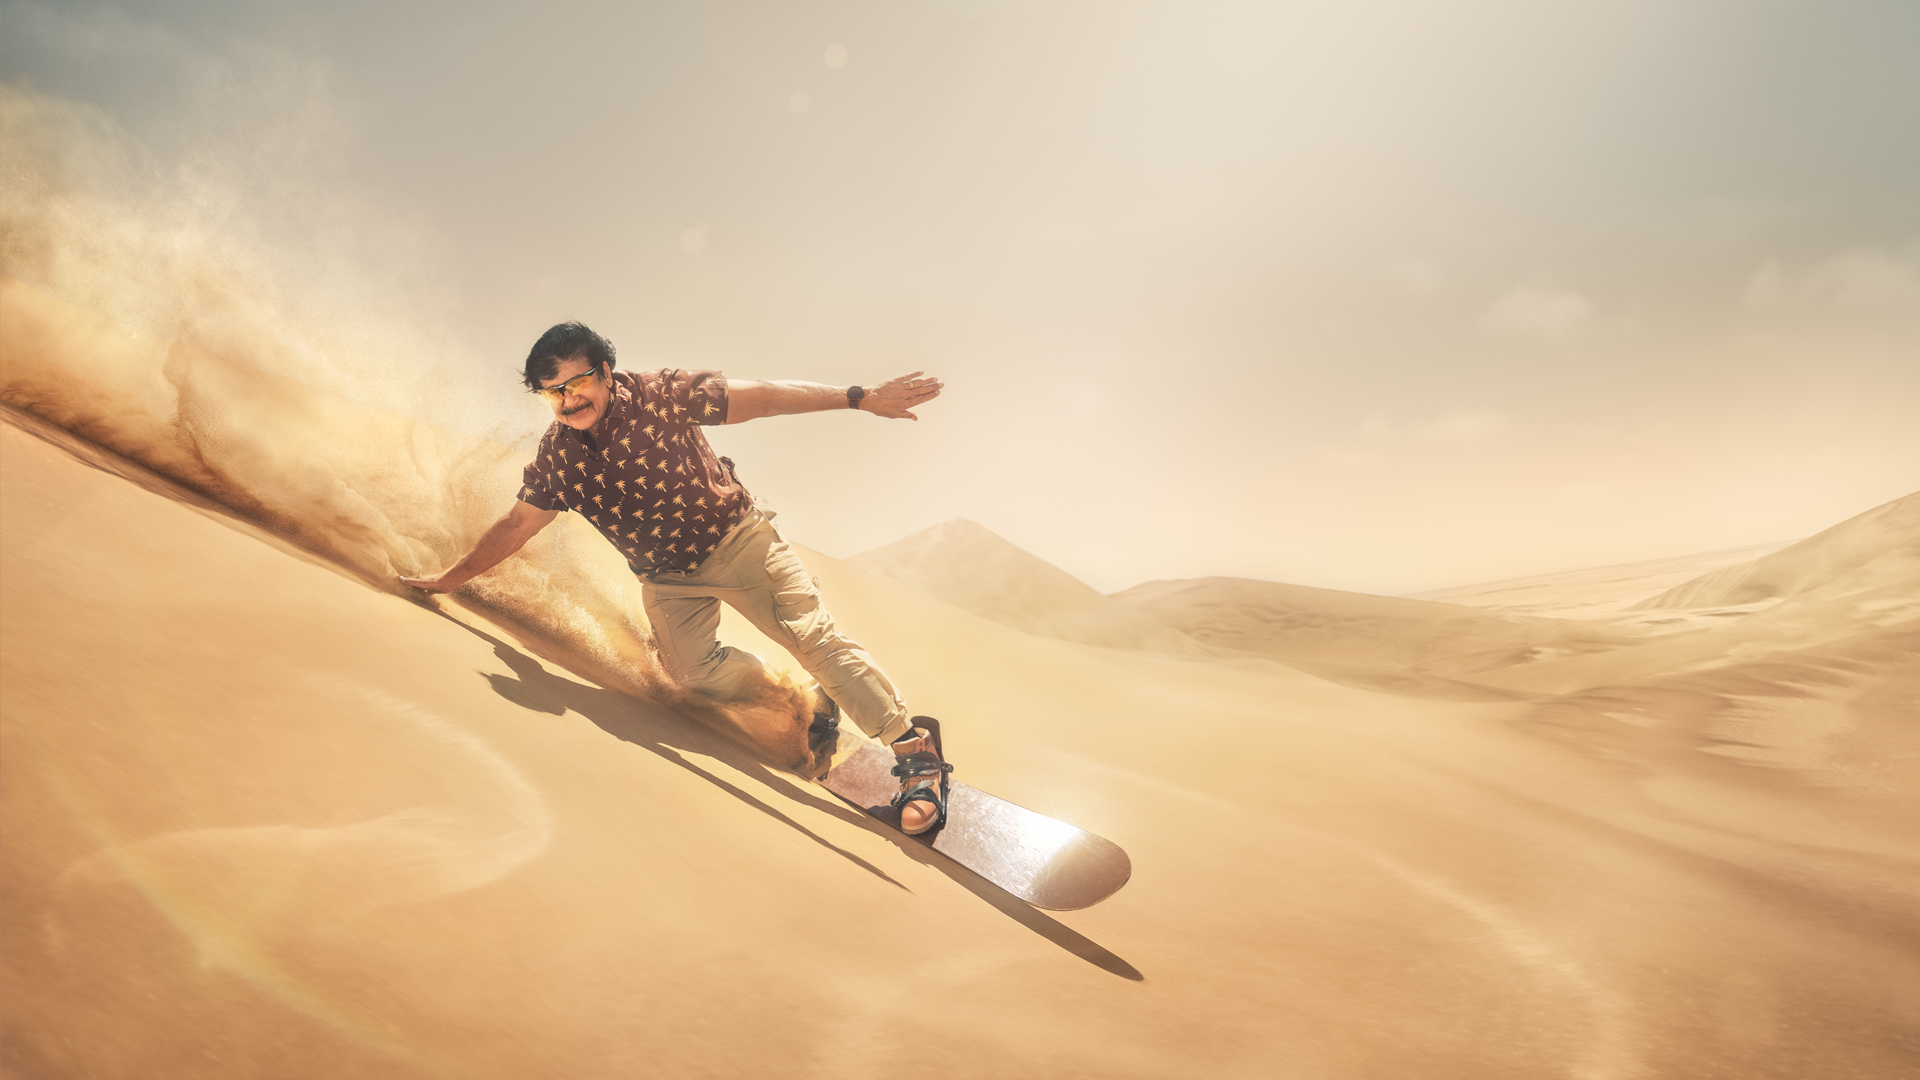 Karim surfar på sanddynorna.